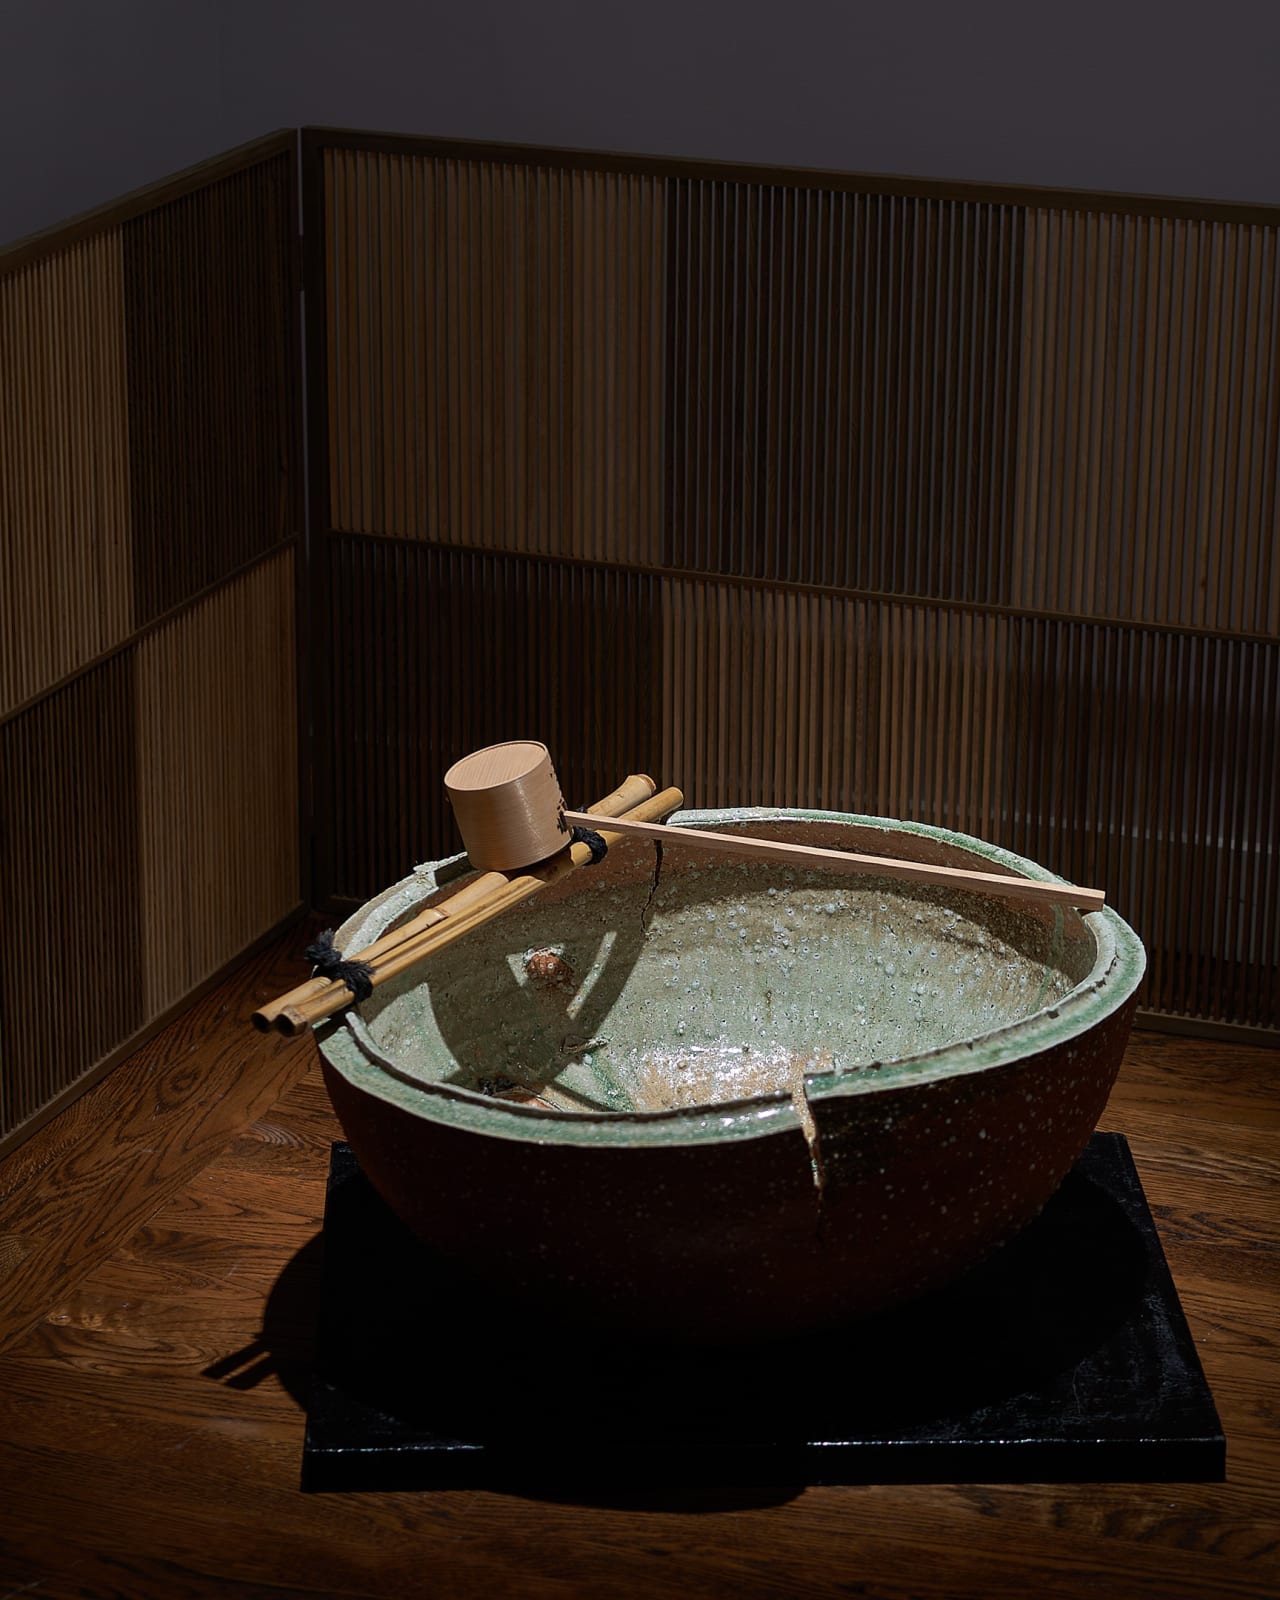 Kogei: The Art of Japanese craft